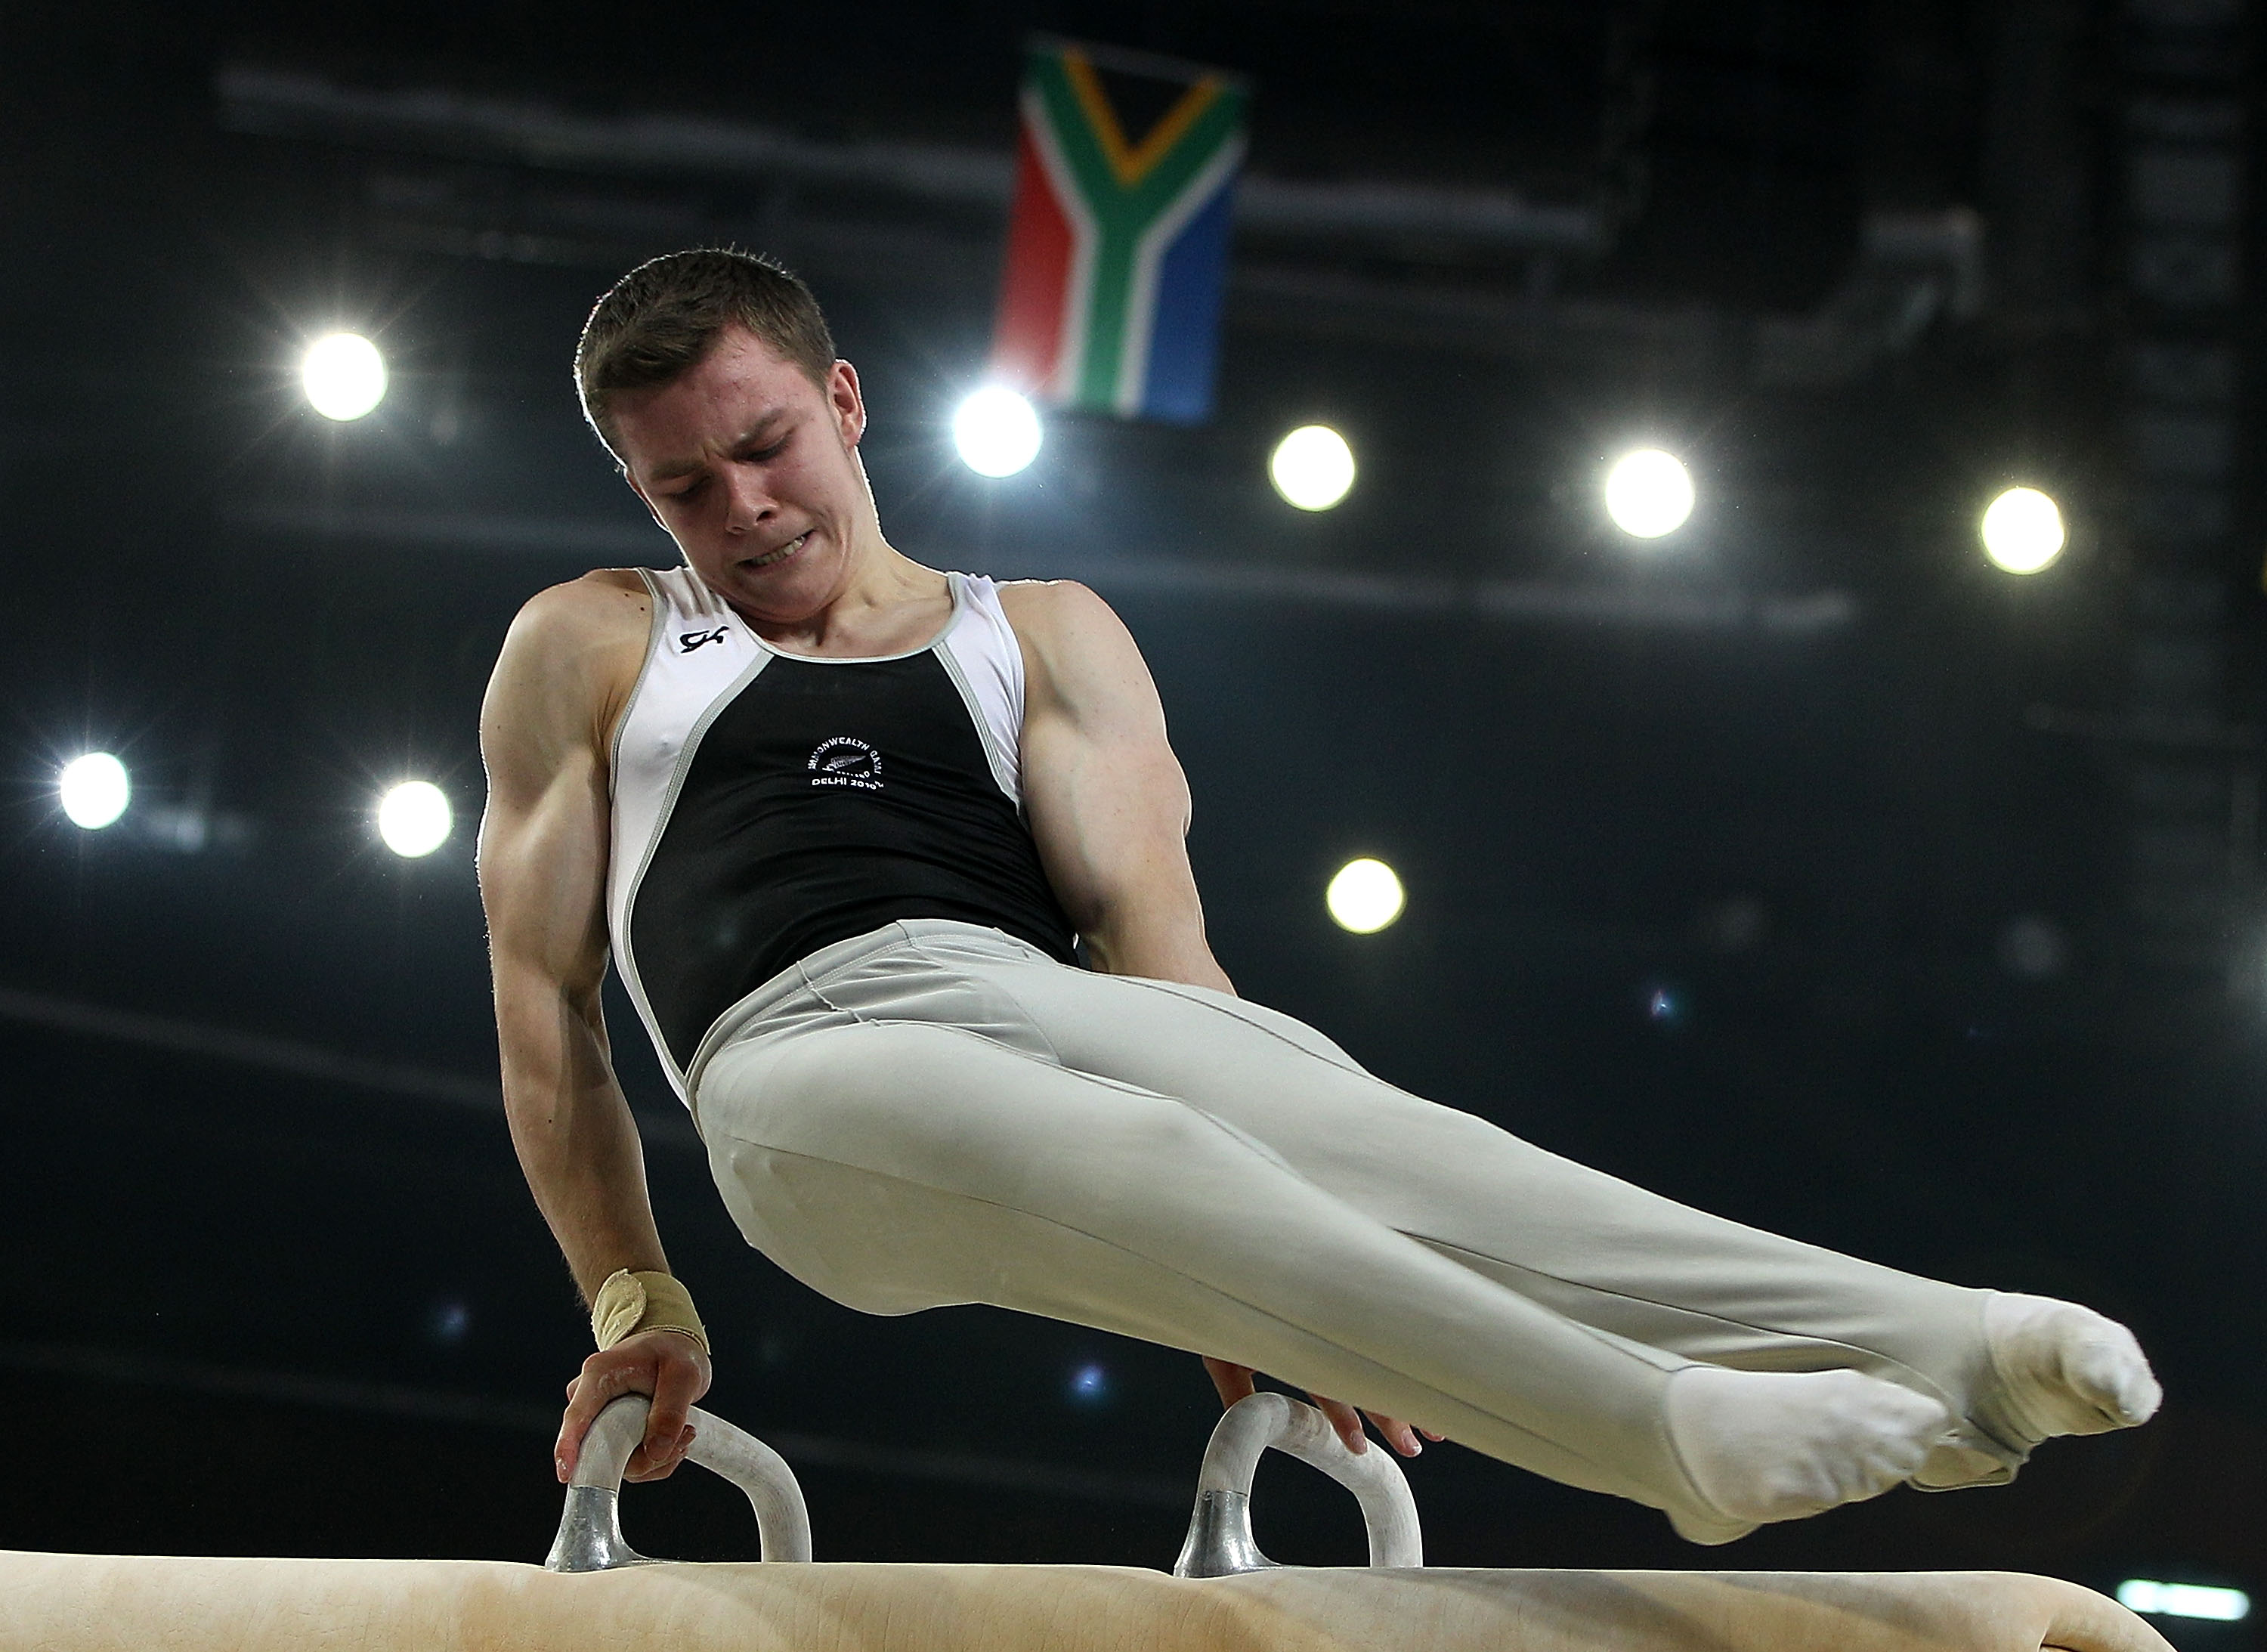 Misha Koudinov | New Zealand Olympic Team